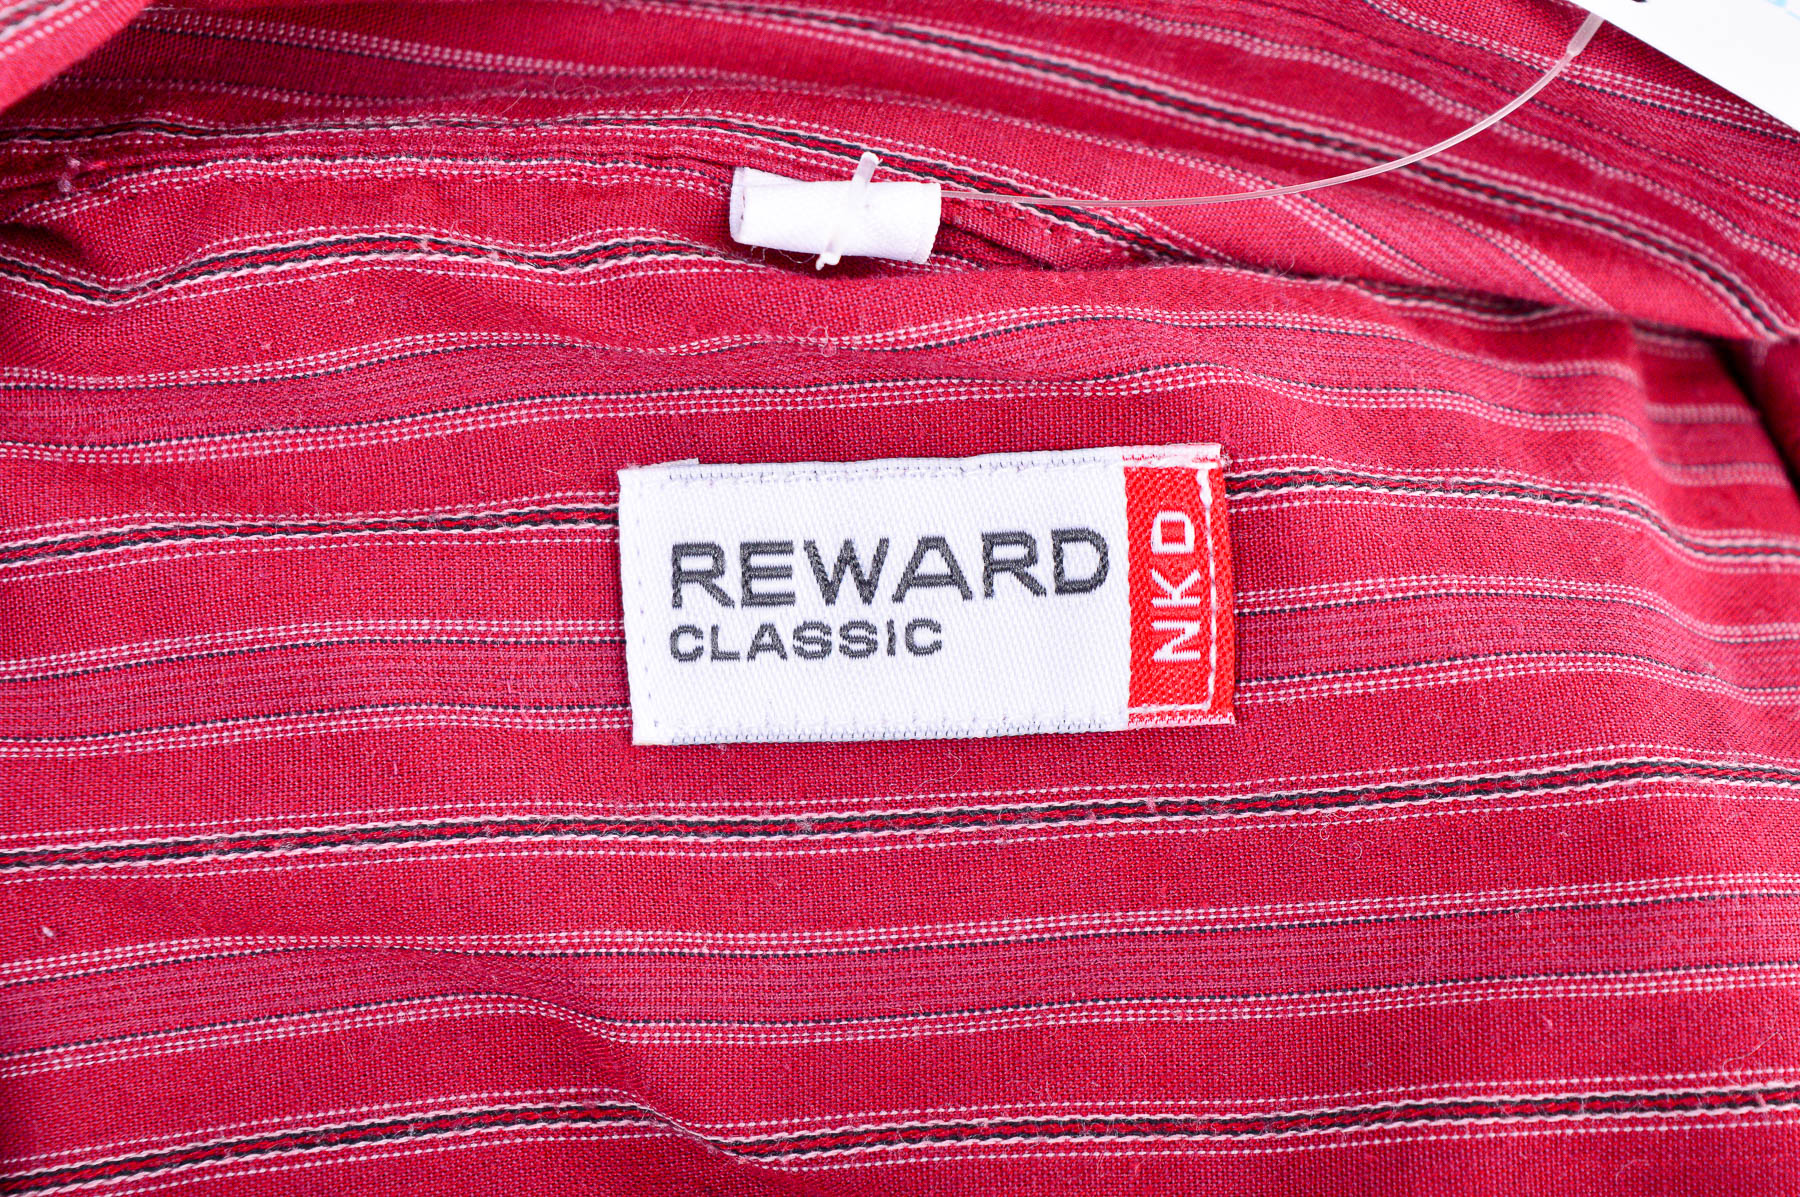 Men's shirt - Reward - 2